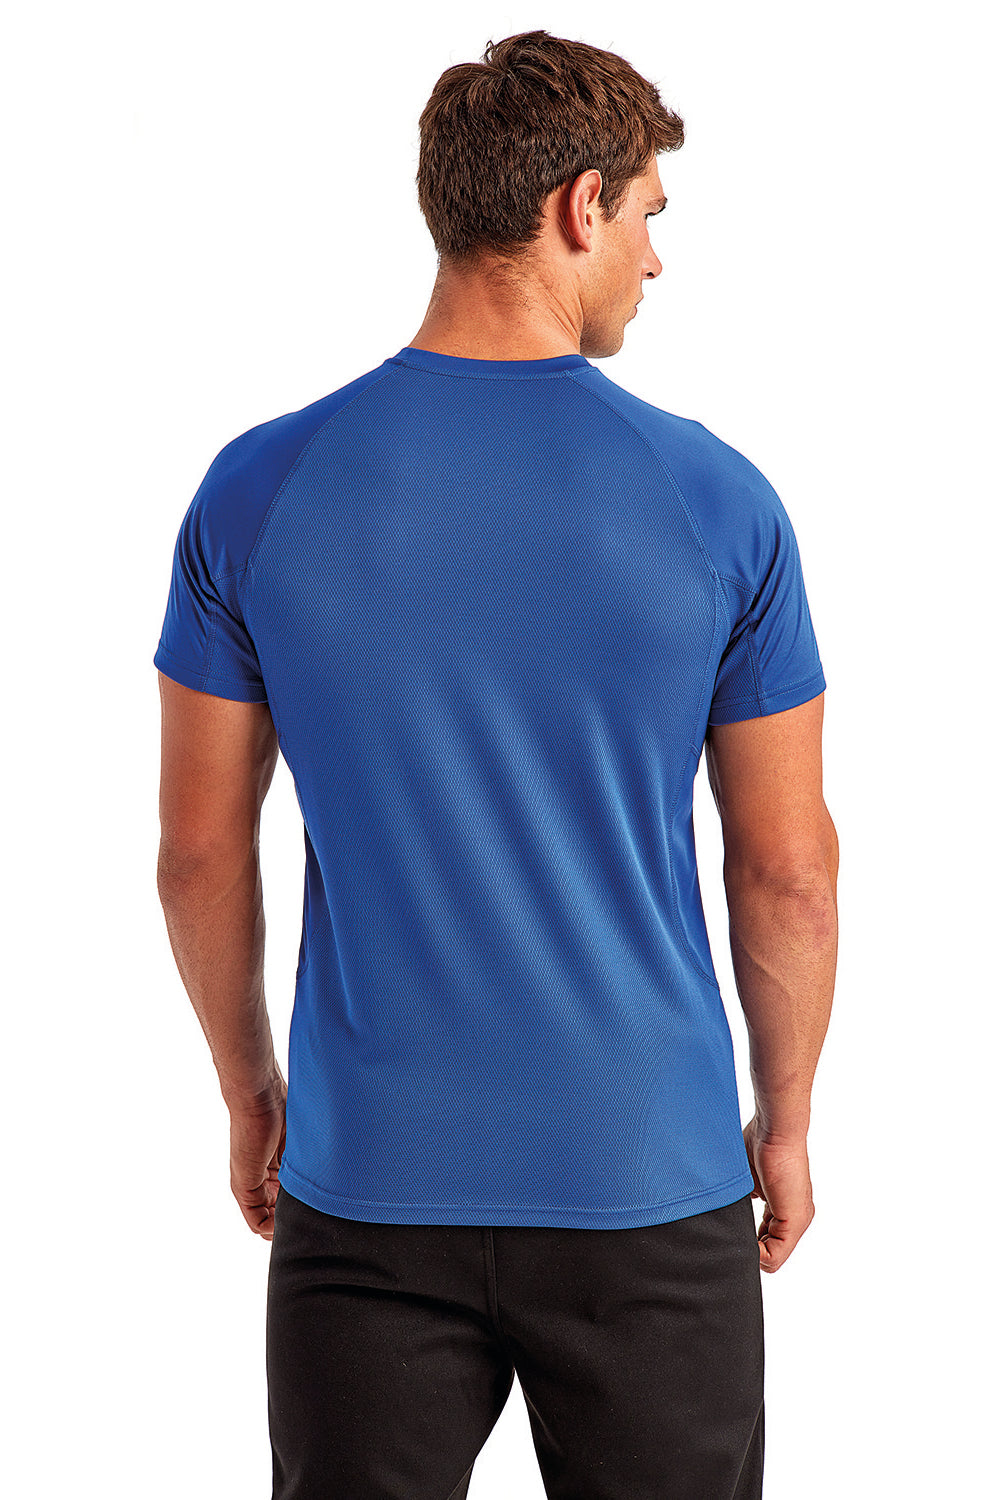 TriDri TD011 Mens Panelled Tech Moisture Wicking Short Sleeve Crewneck T-Shirt Royal Blue Back